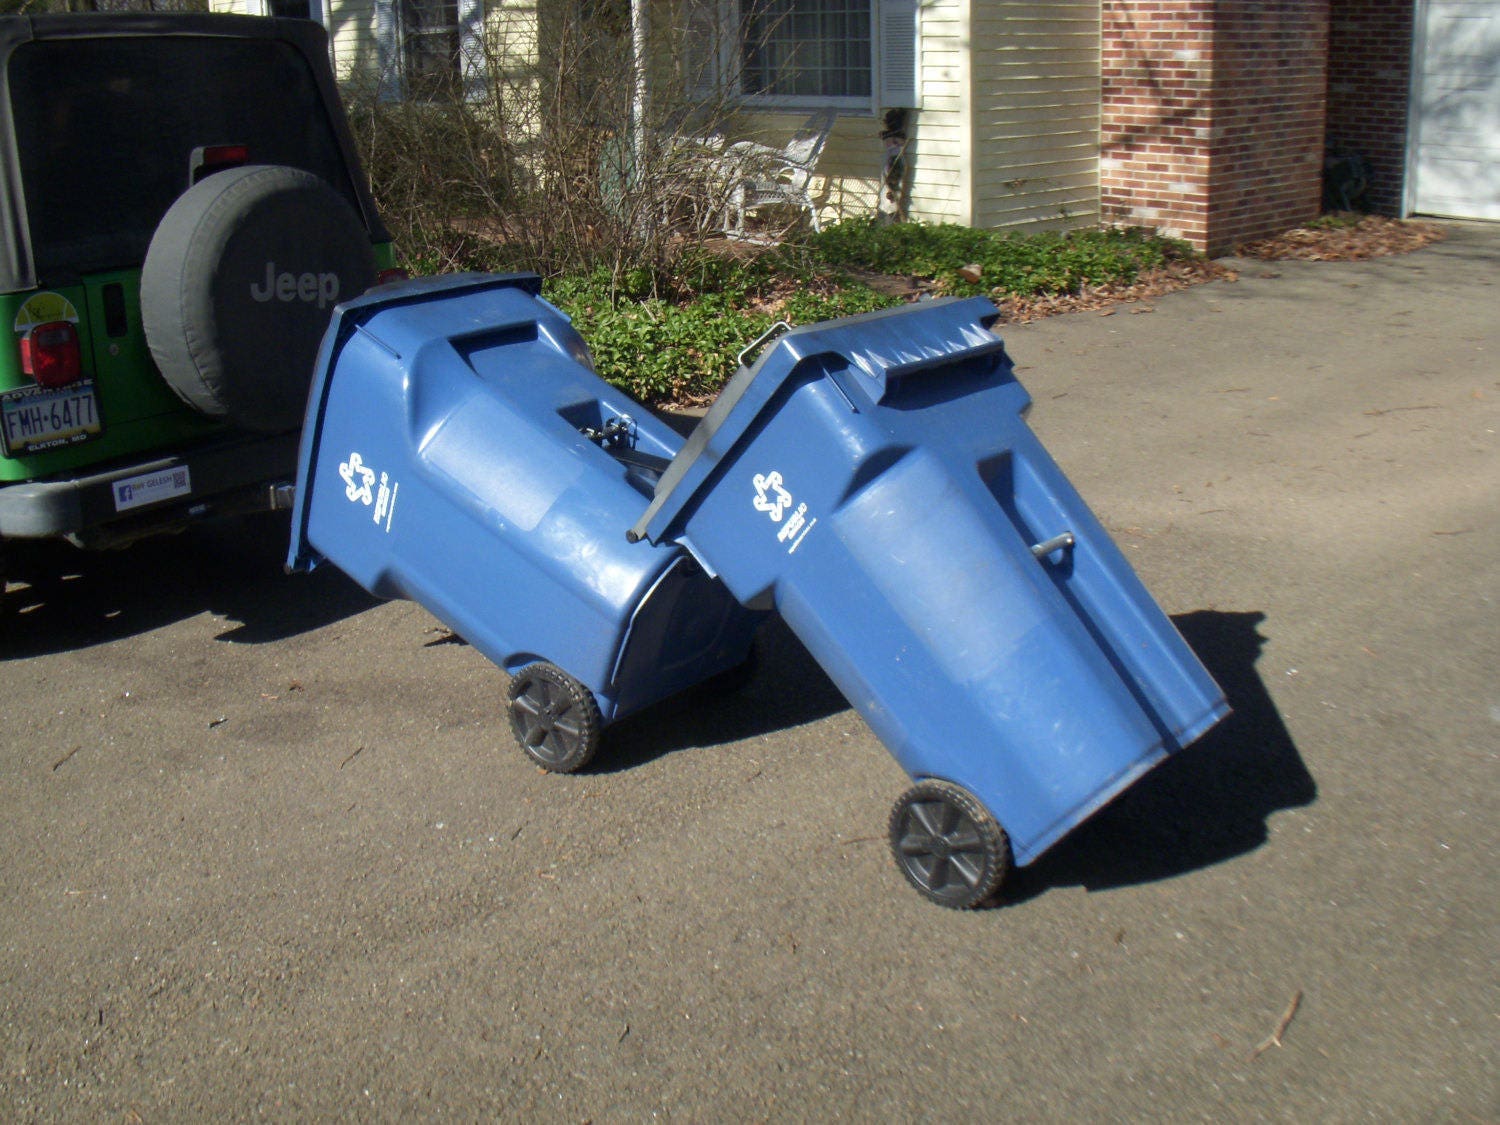 Kincown [Newest] [2 Pack] Car Trash Can, Mini Vehicle Trash Can